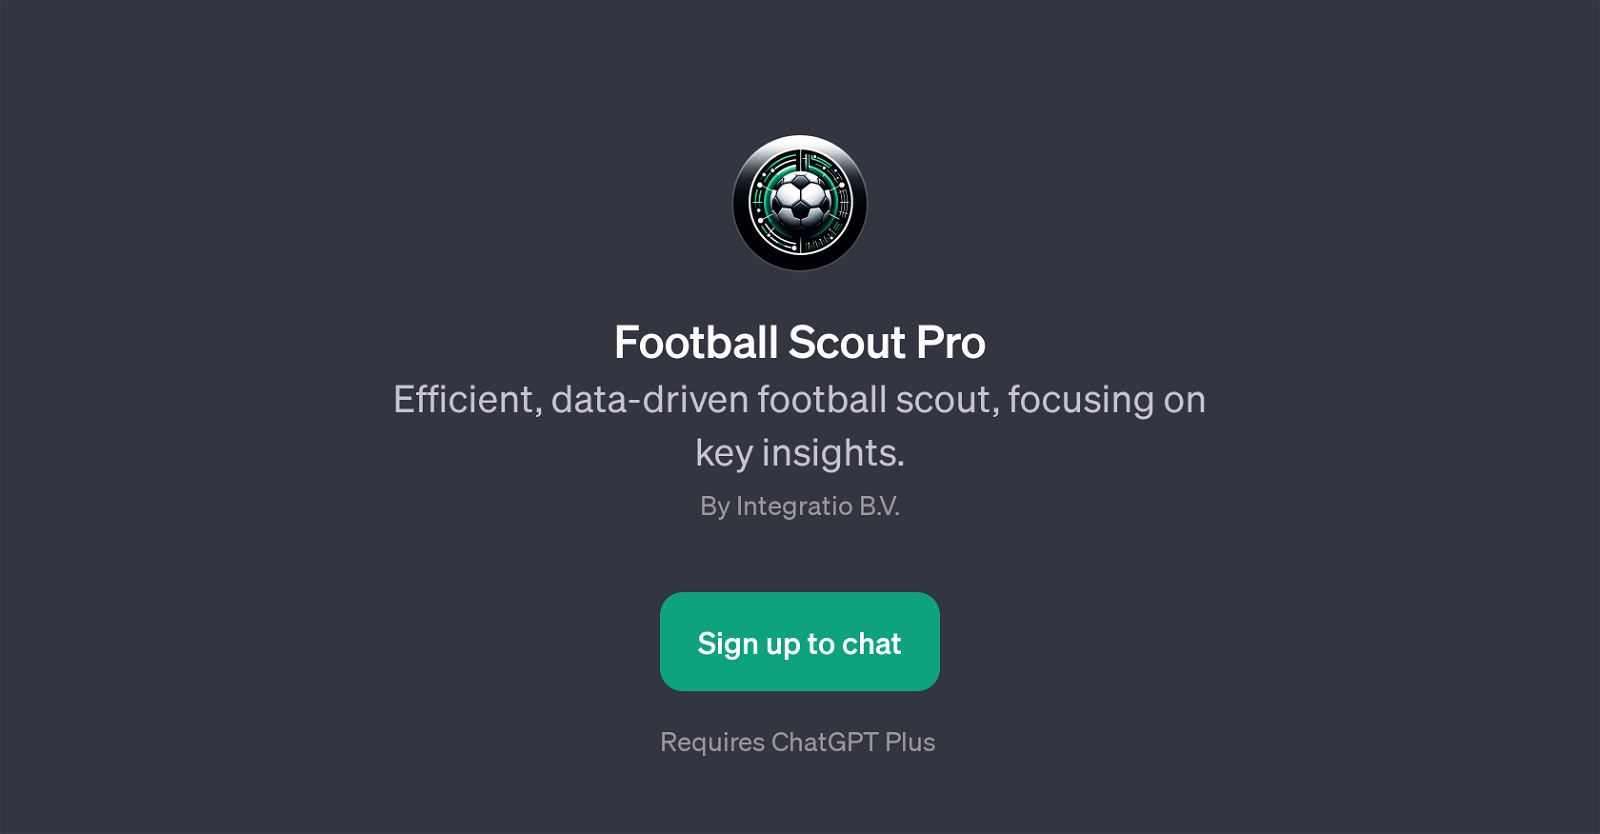 Football Scout Pro website